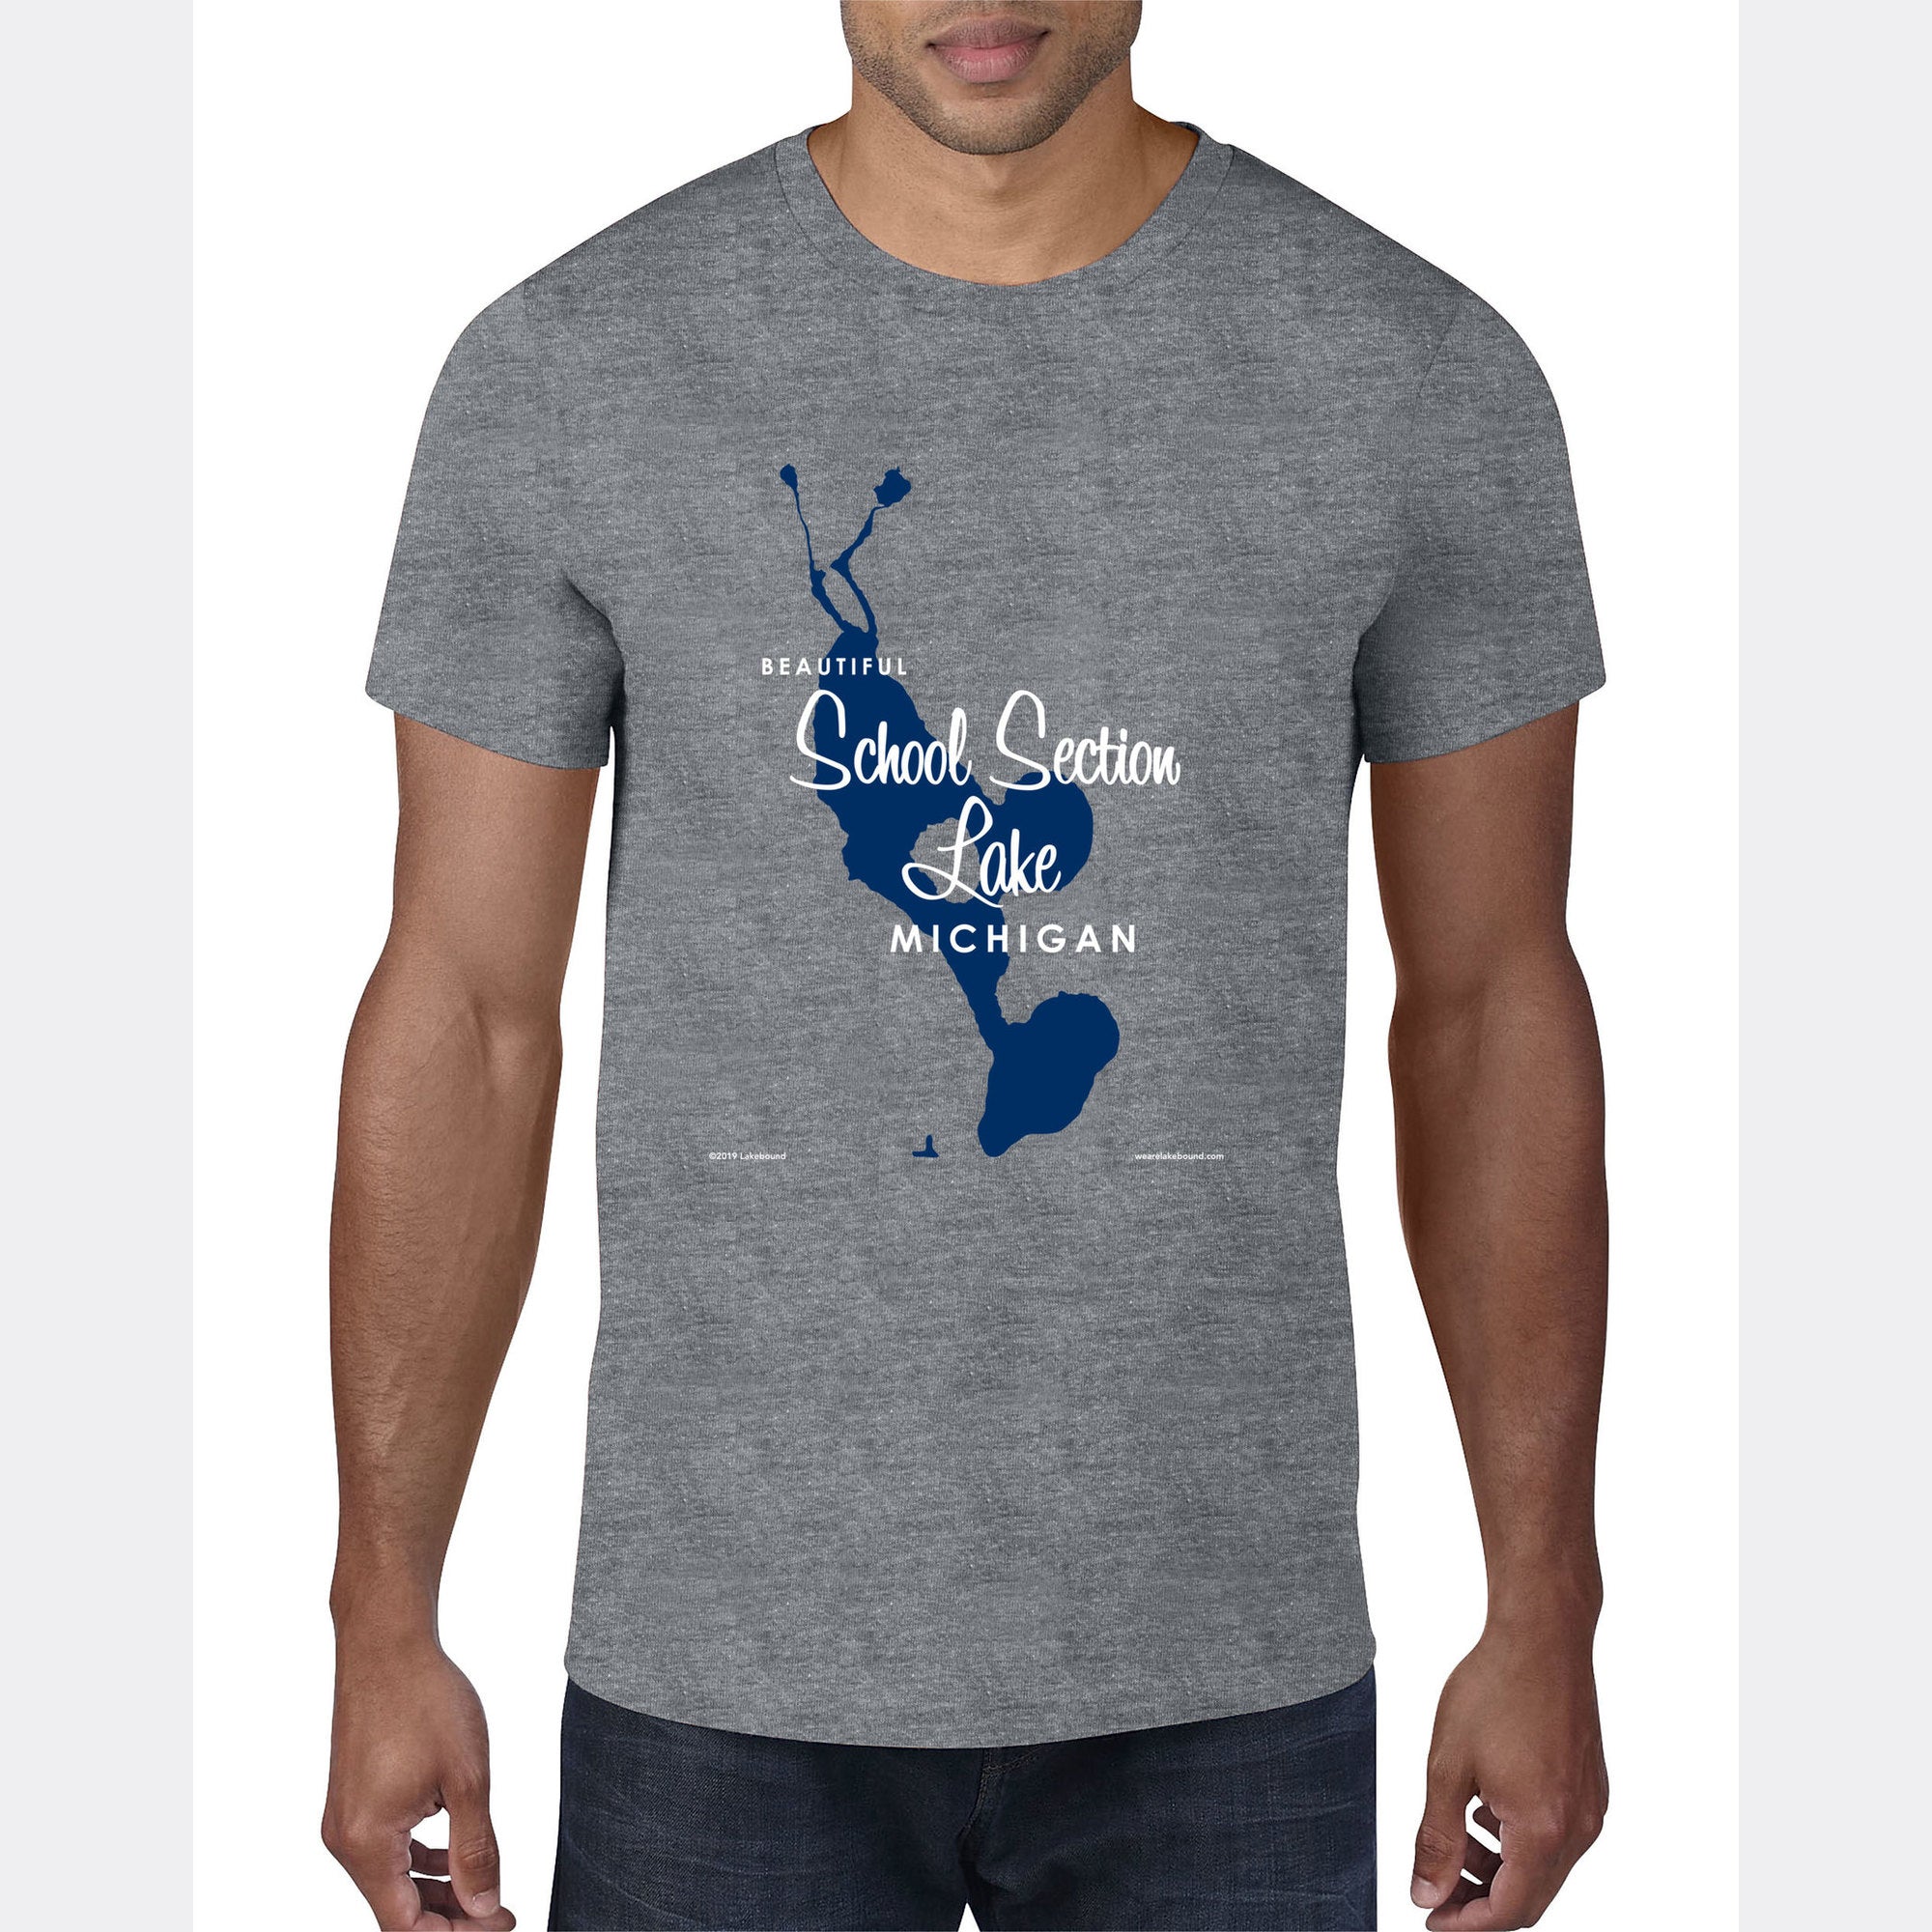 School Section Lake Michigan, T-Shirt